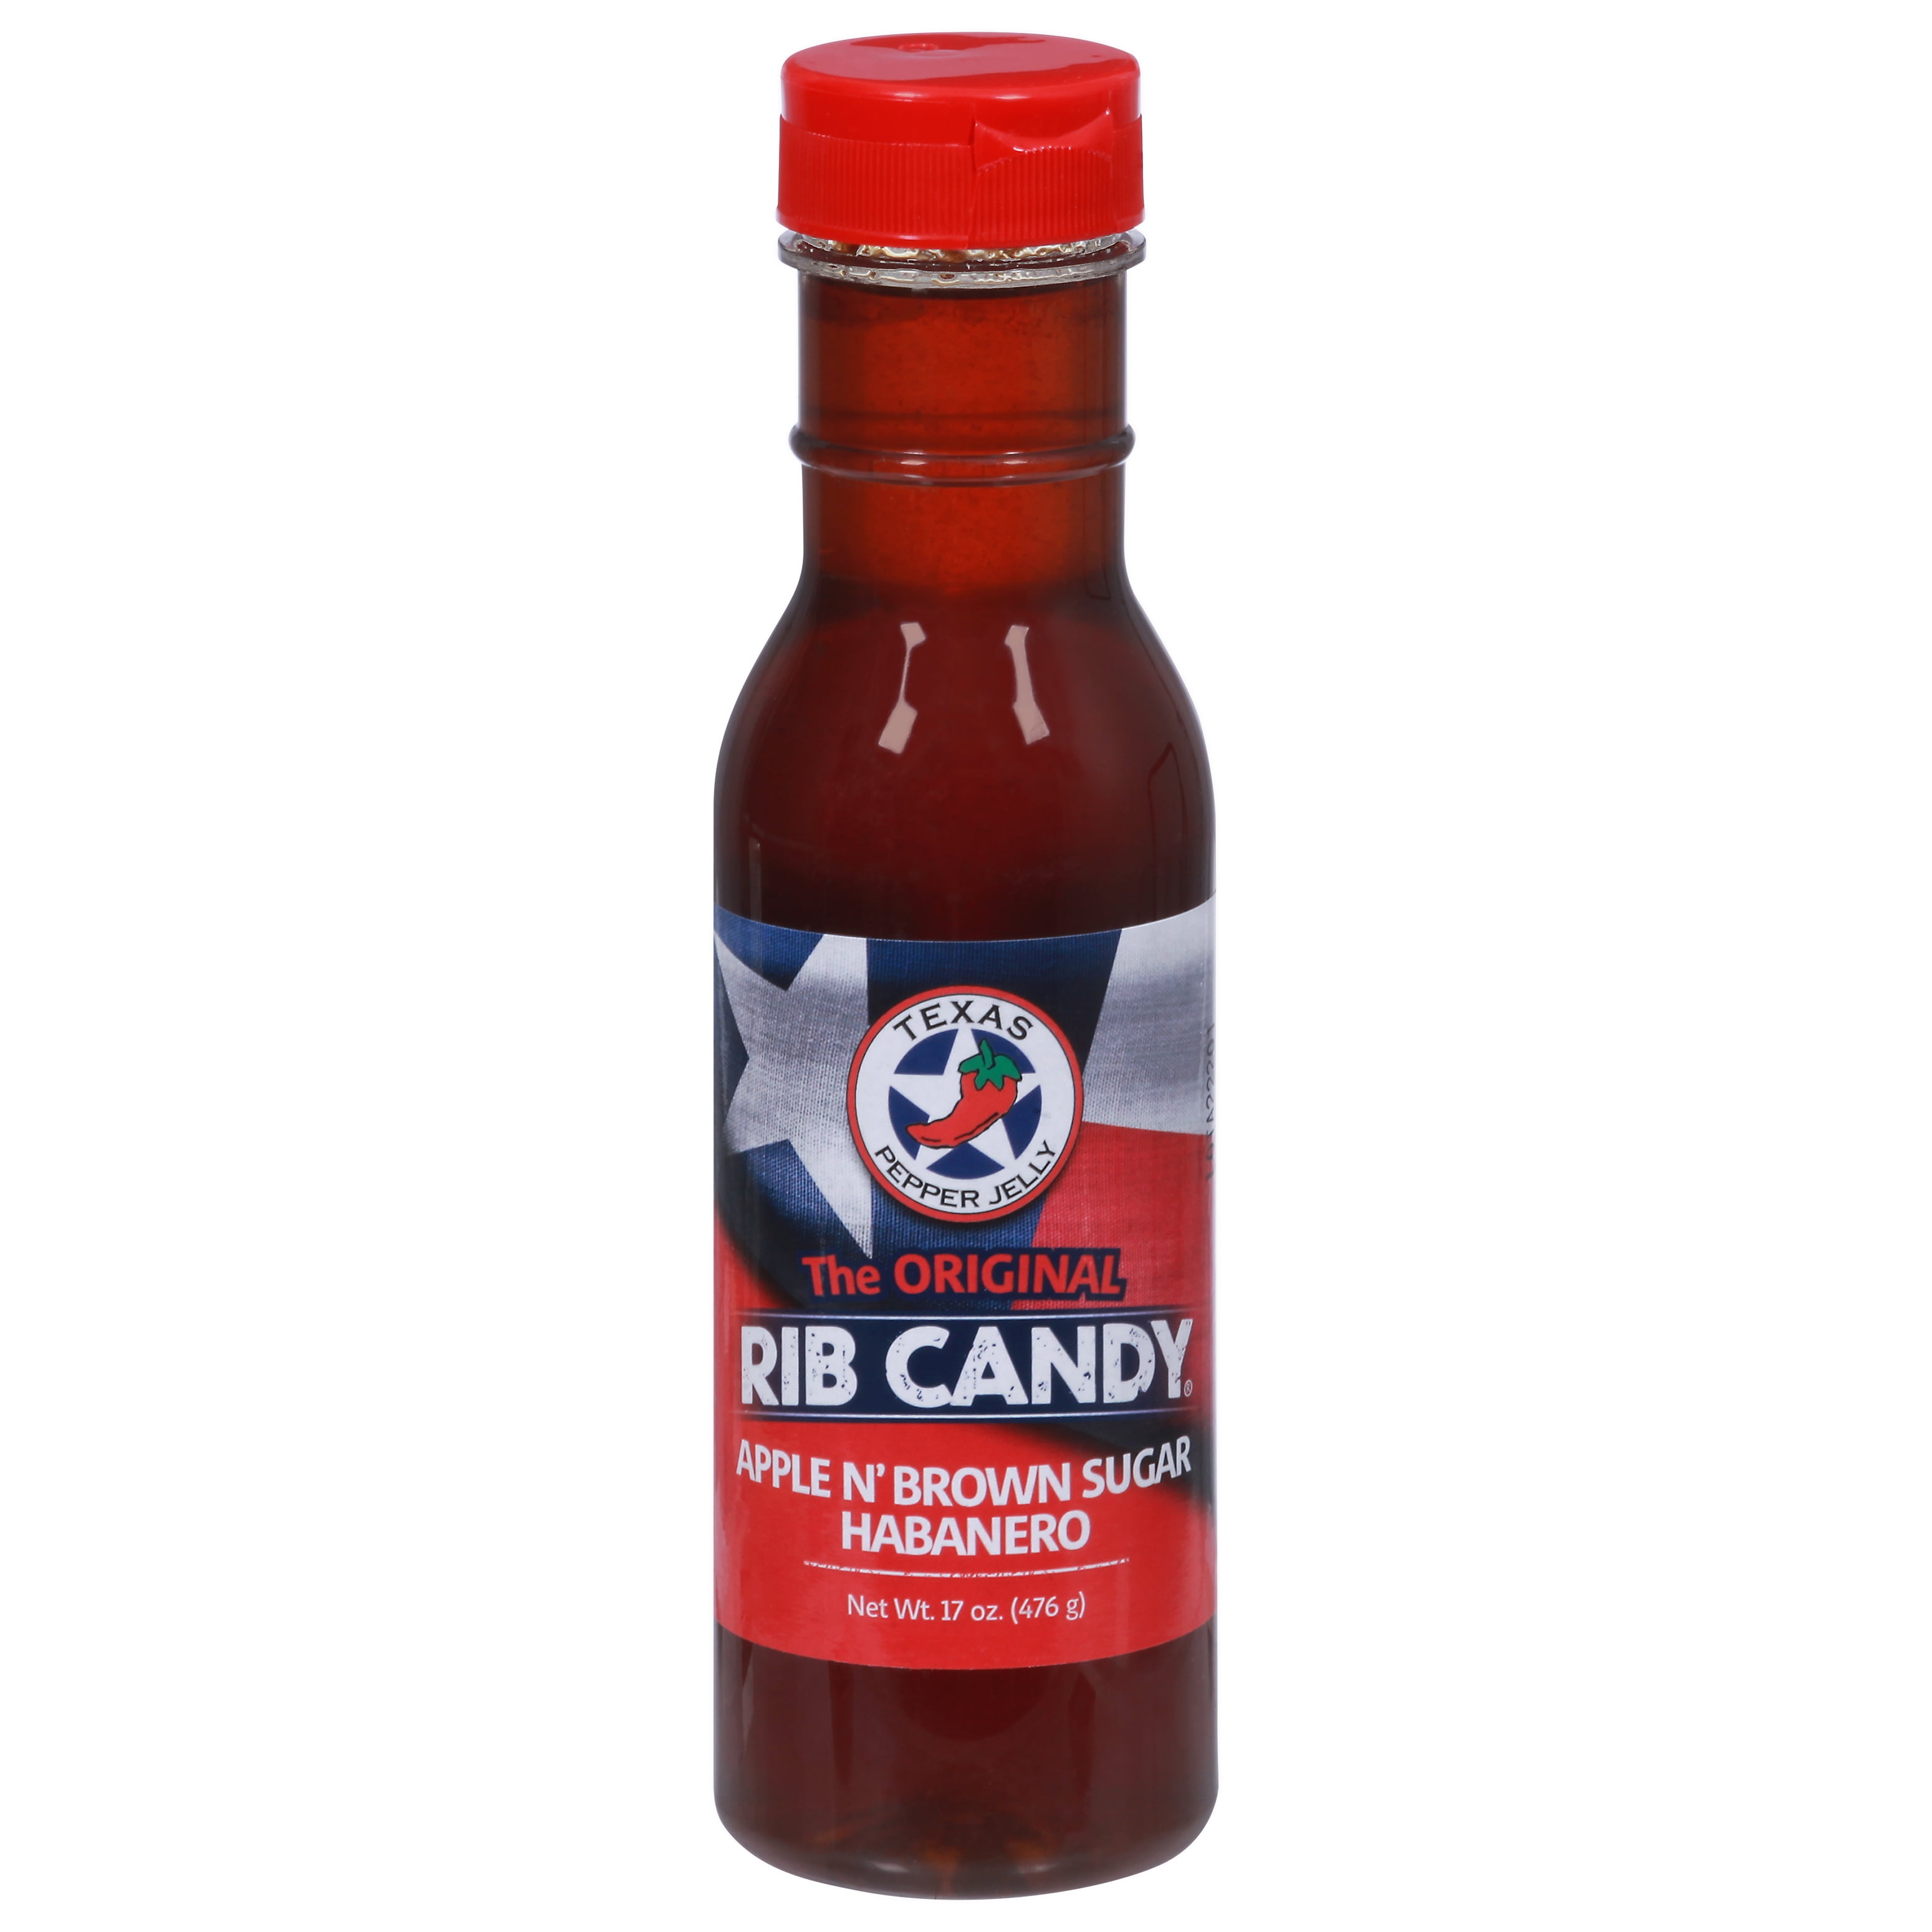 Texas Pepper Jelly Apple N Brown Sugar Habanero Rib Candy 12oz reviews -  BBQ Spit Rotisseries - Trustpilot